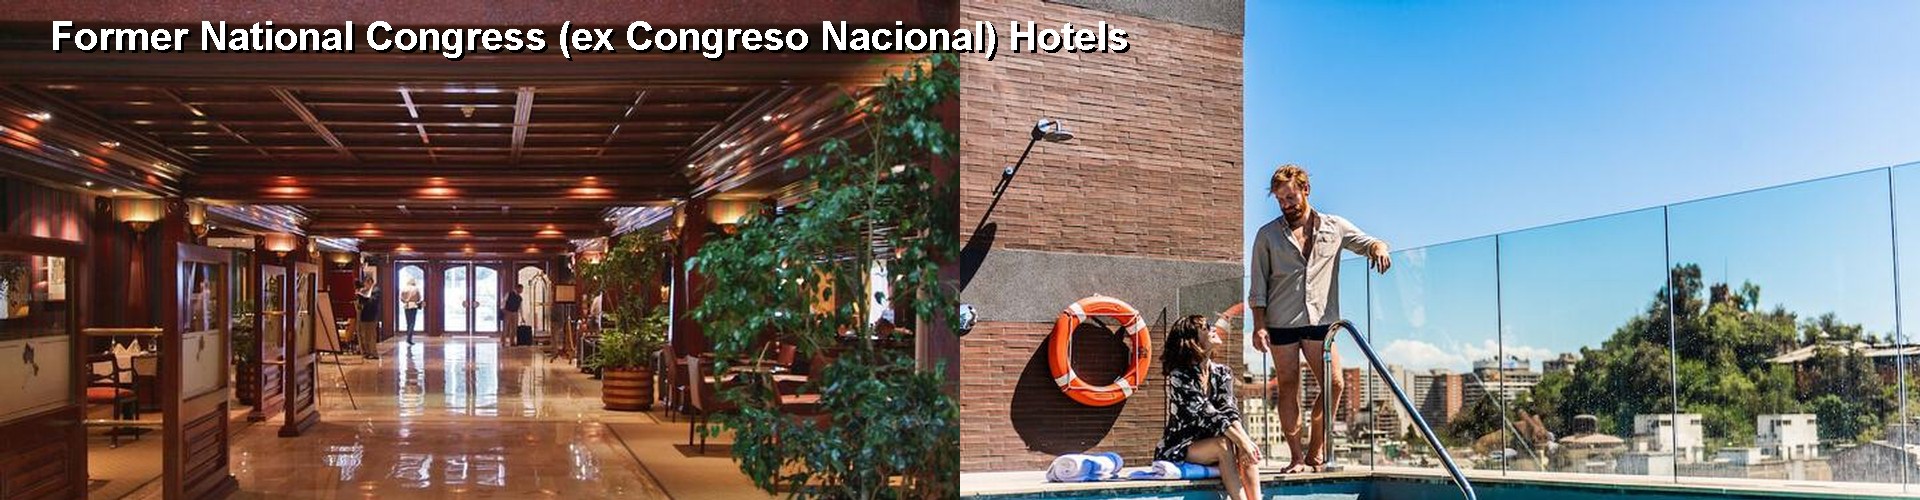 5 Best Hotels near Former National Congress (ex Congreso Nacional)